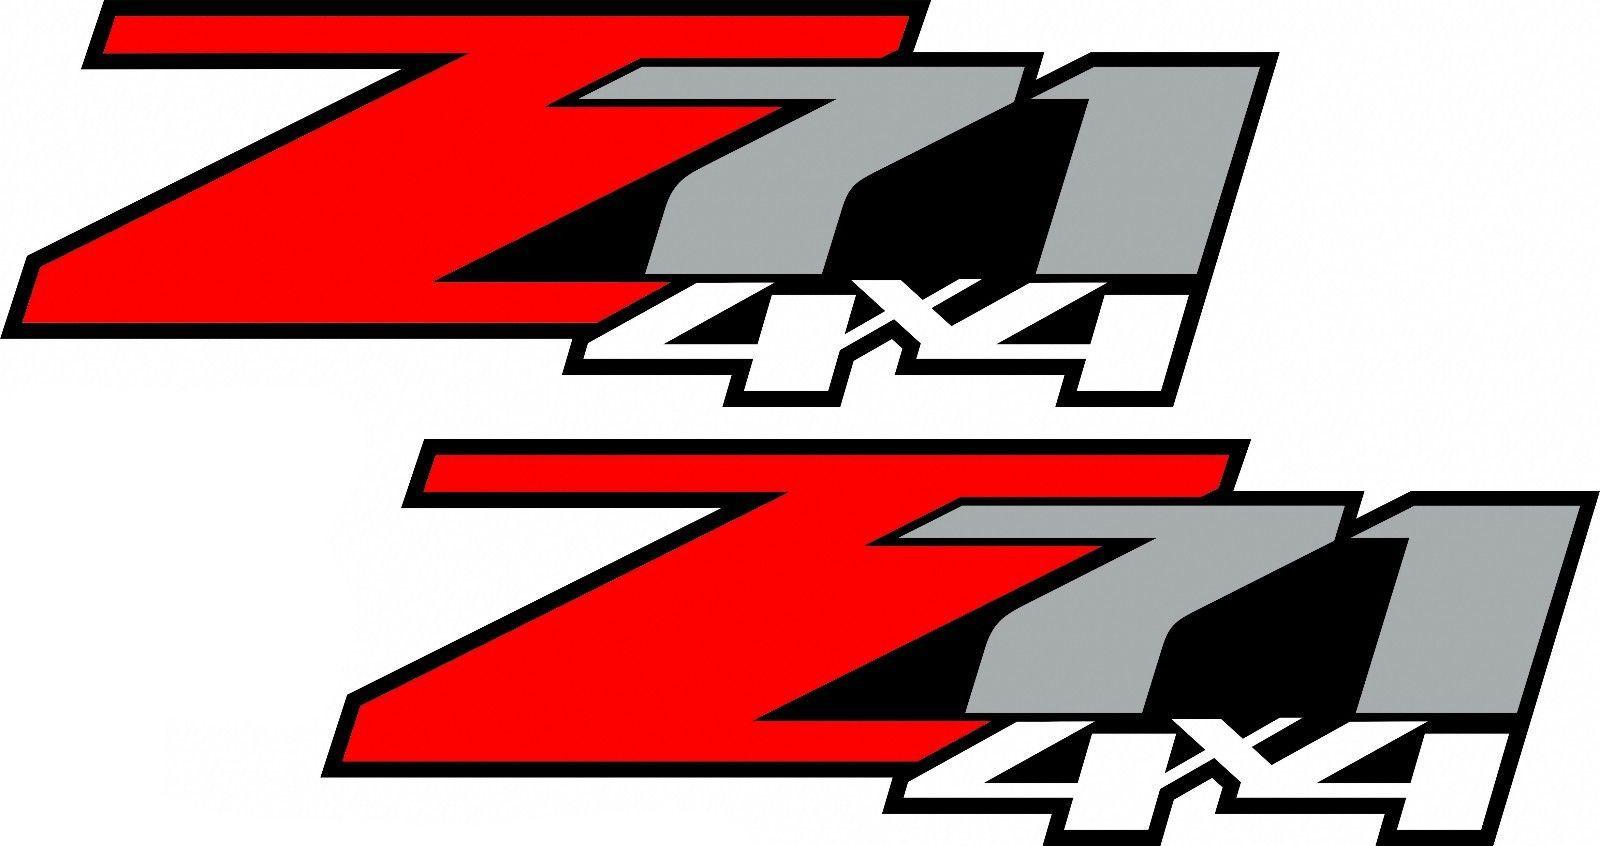 Z71 Logo - Product: 2 Chevy Z71 Off Road 4x4 Truck Decal/Sticker X2